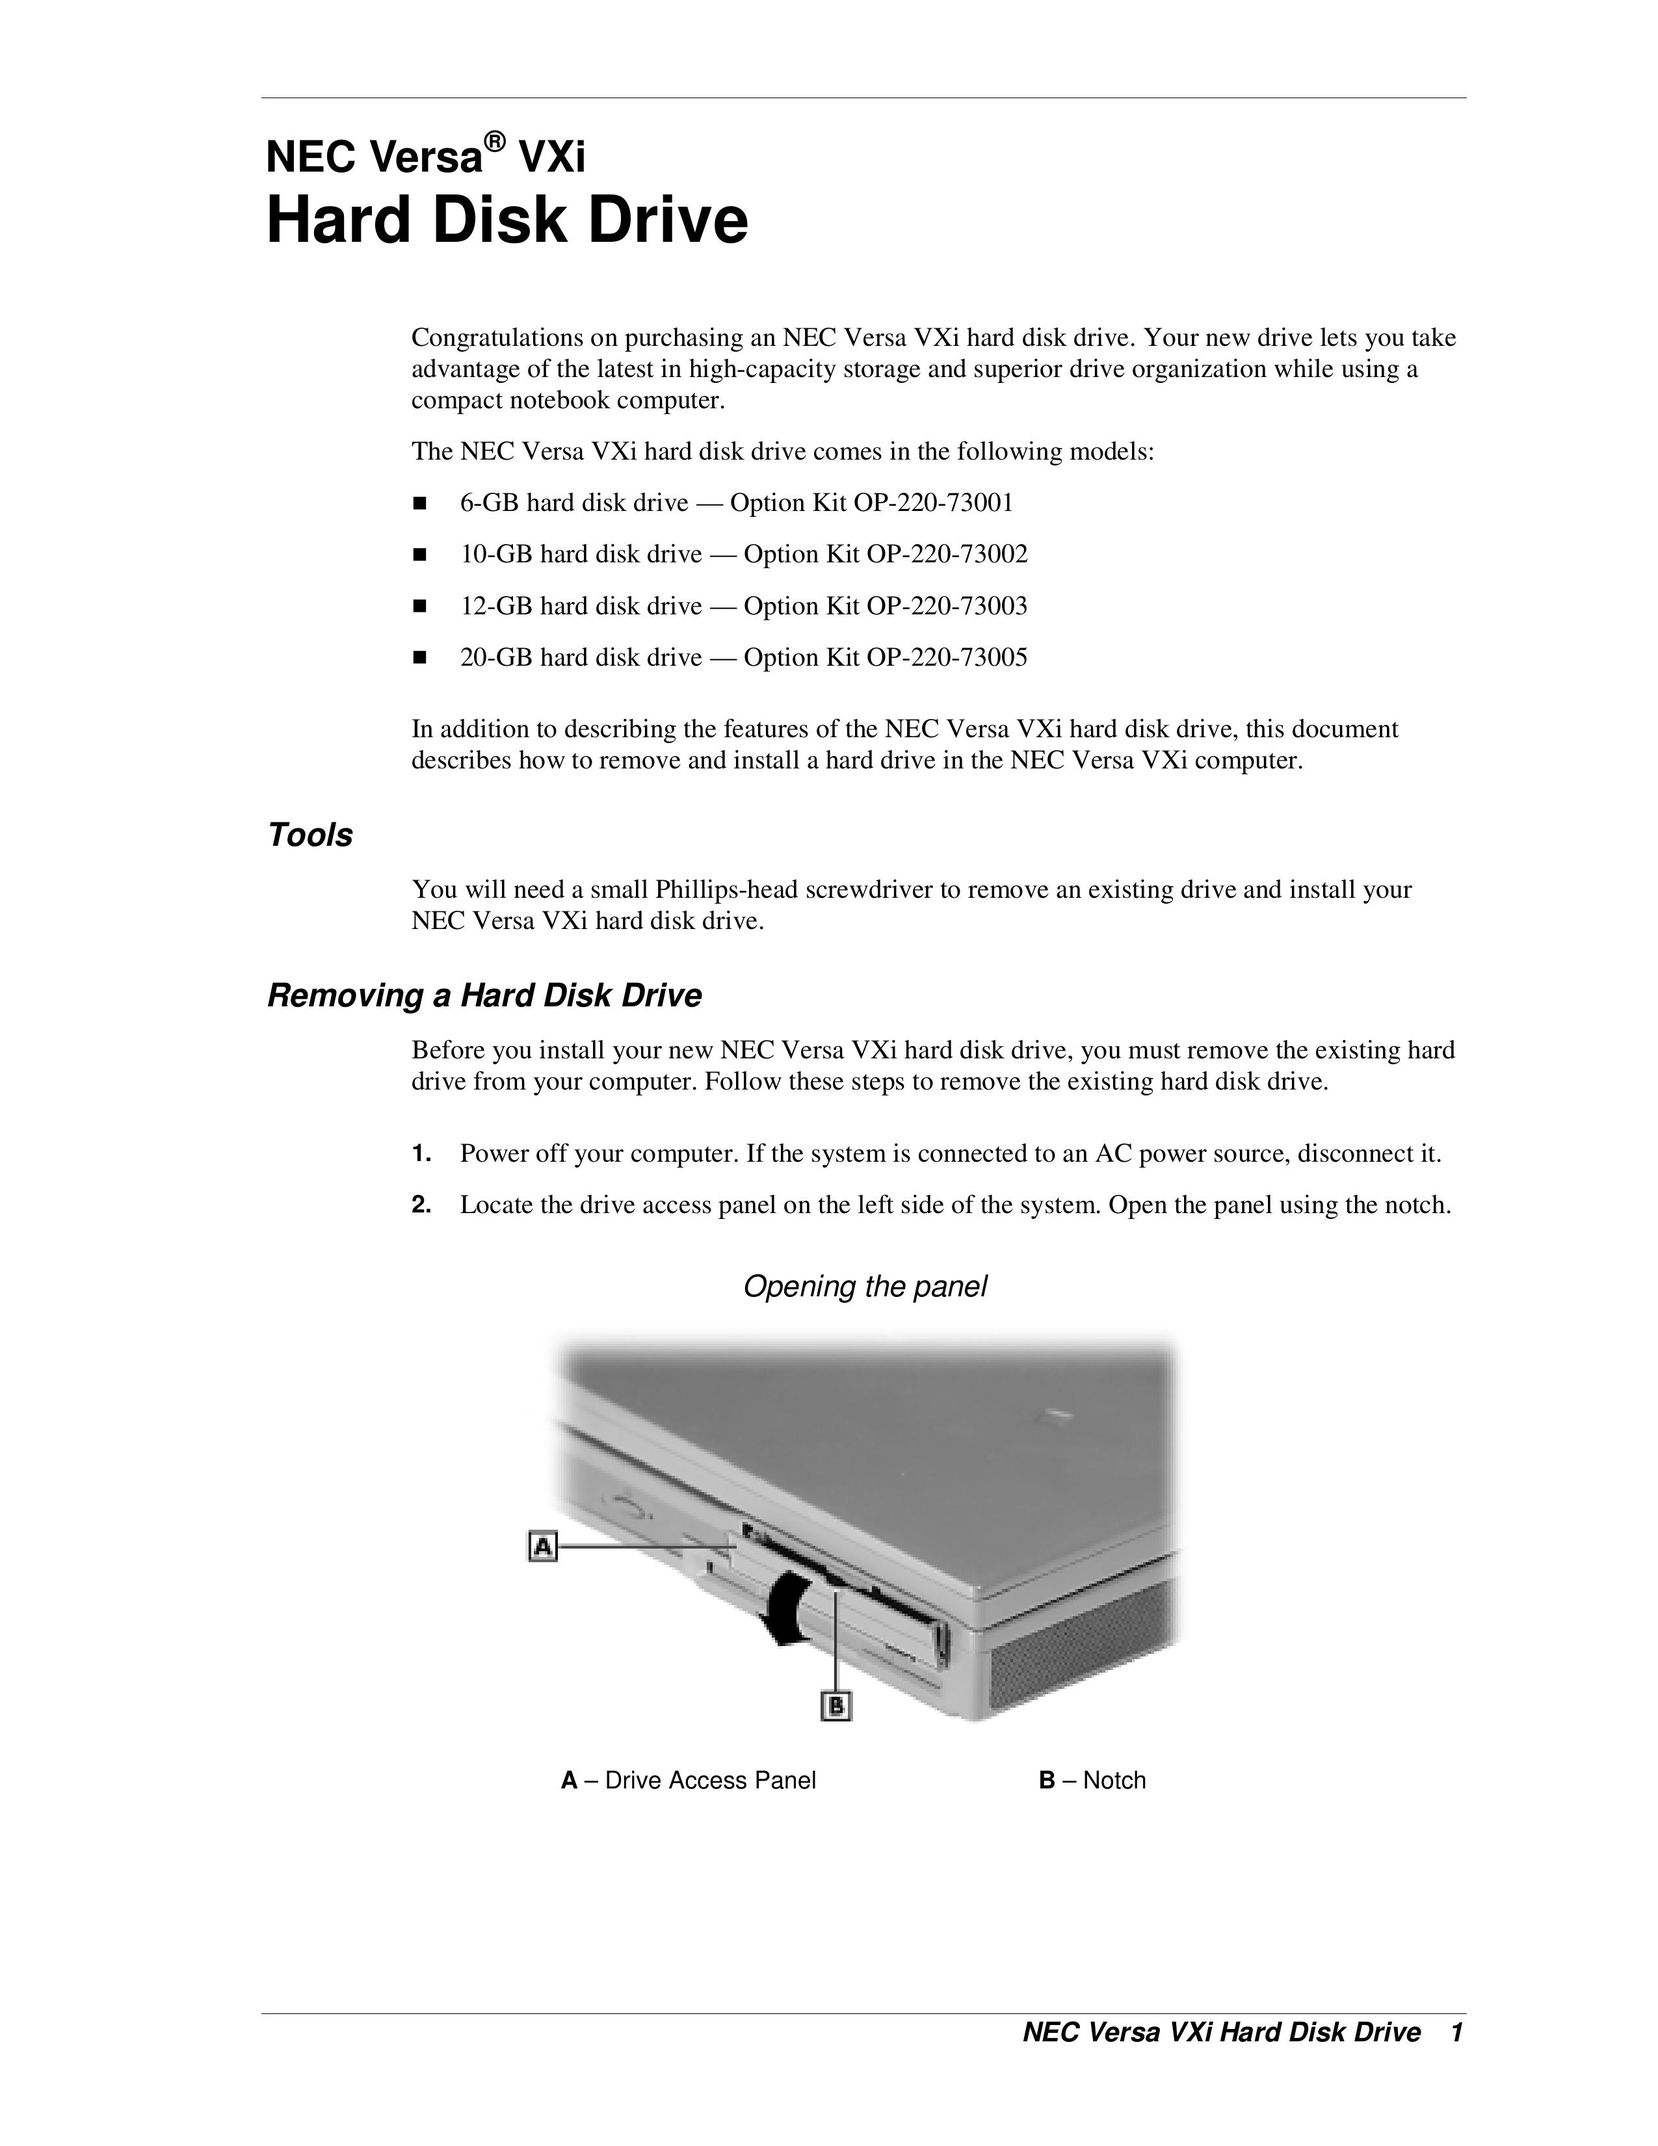 NEC OP-220-73005 Computer Drive User Manual